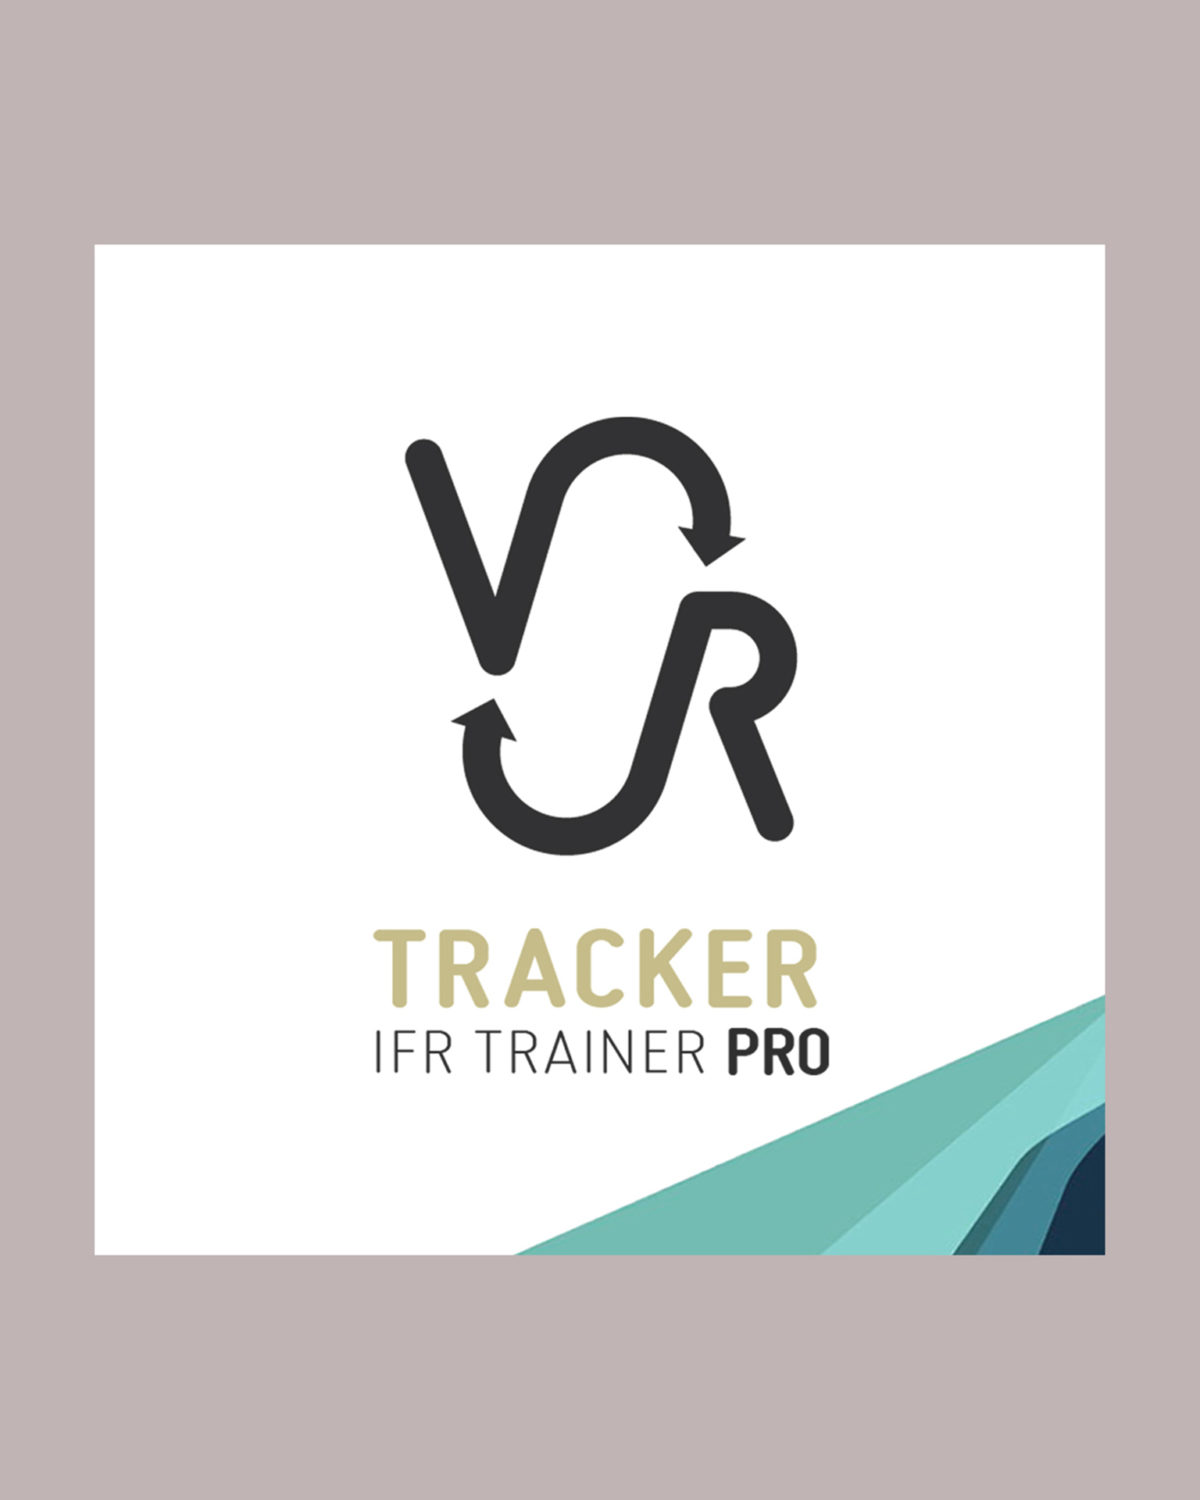 VOR Tracker IFR Trainer